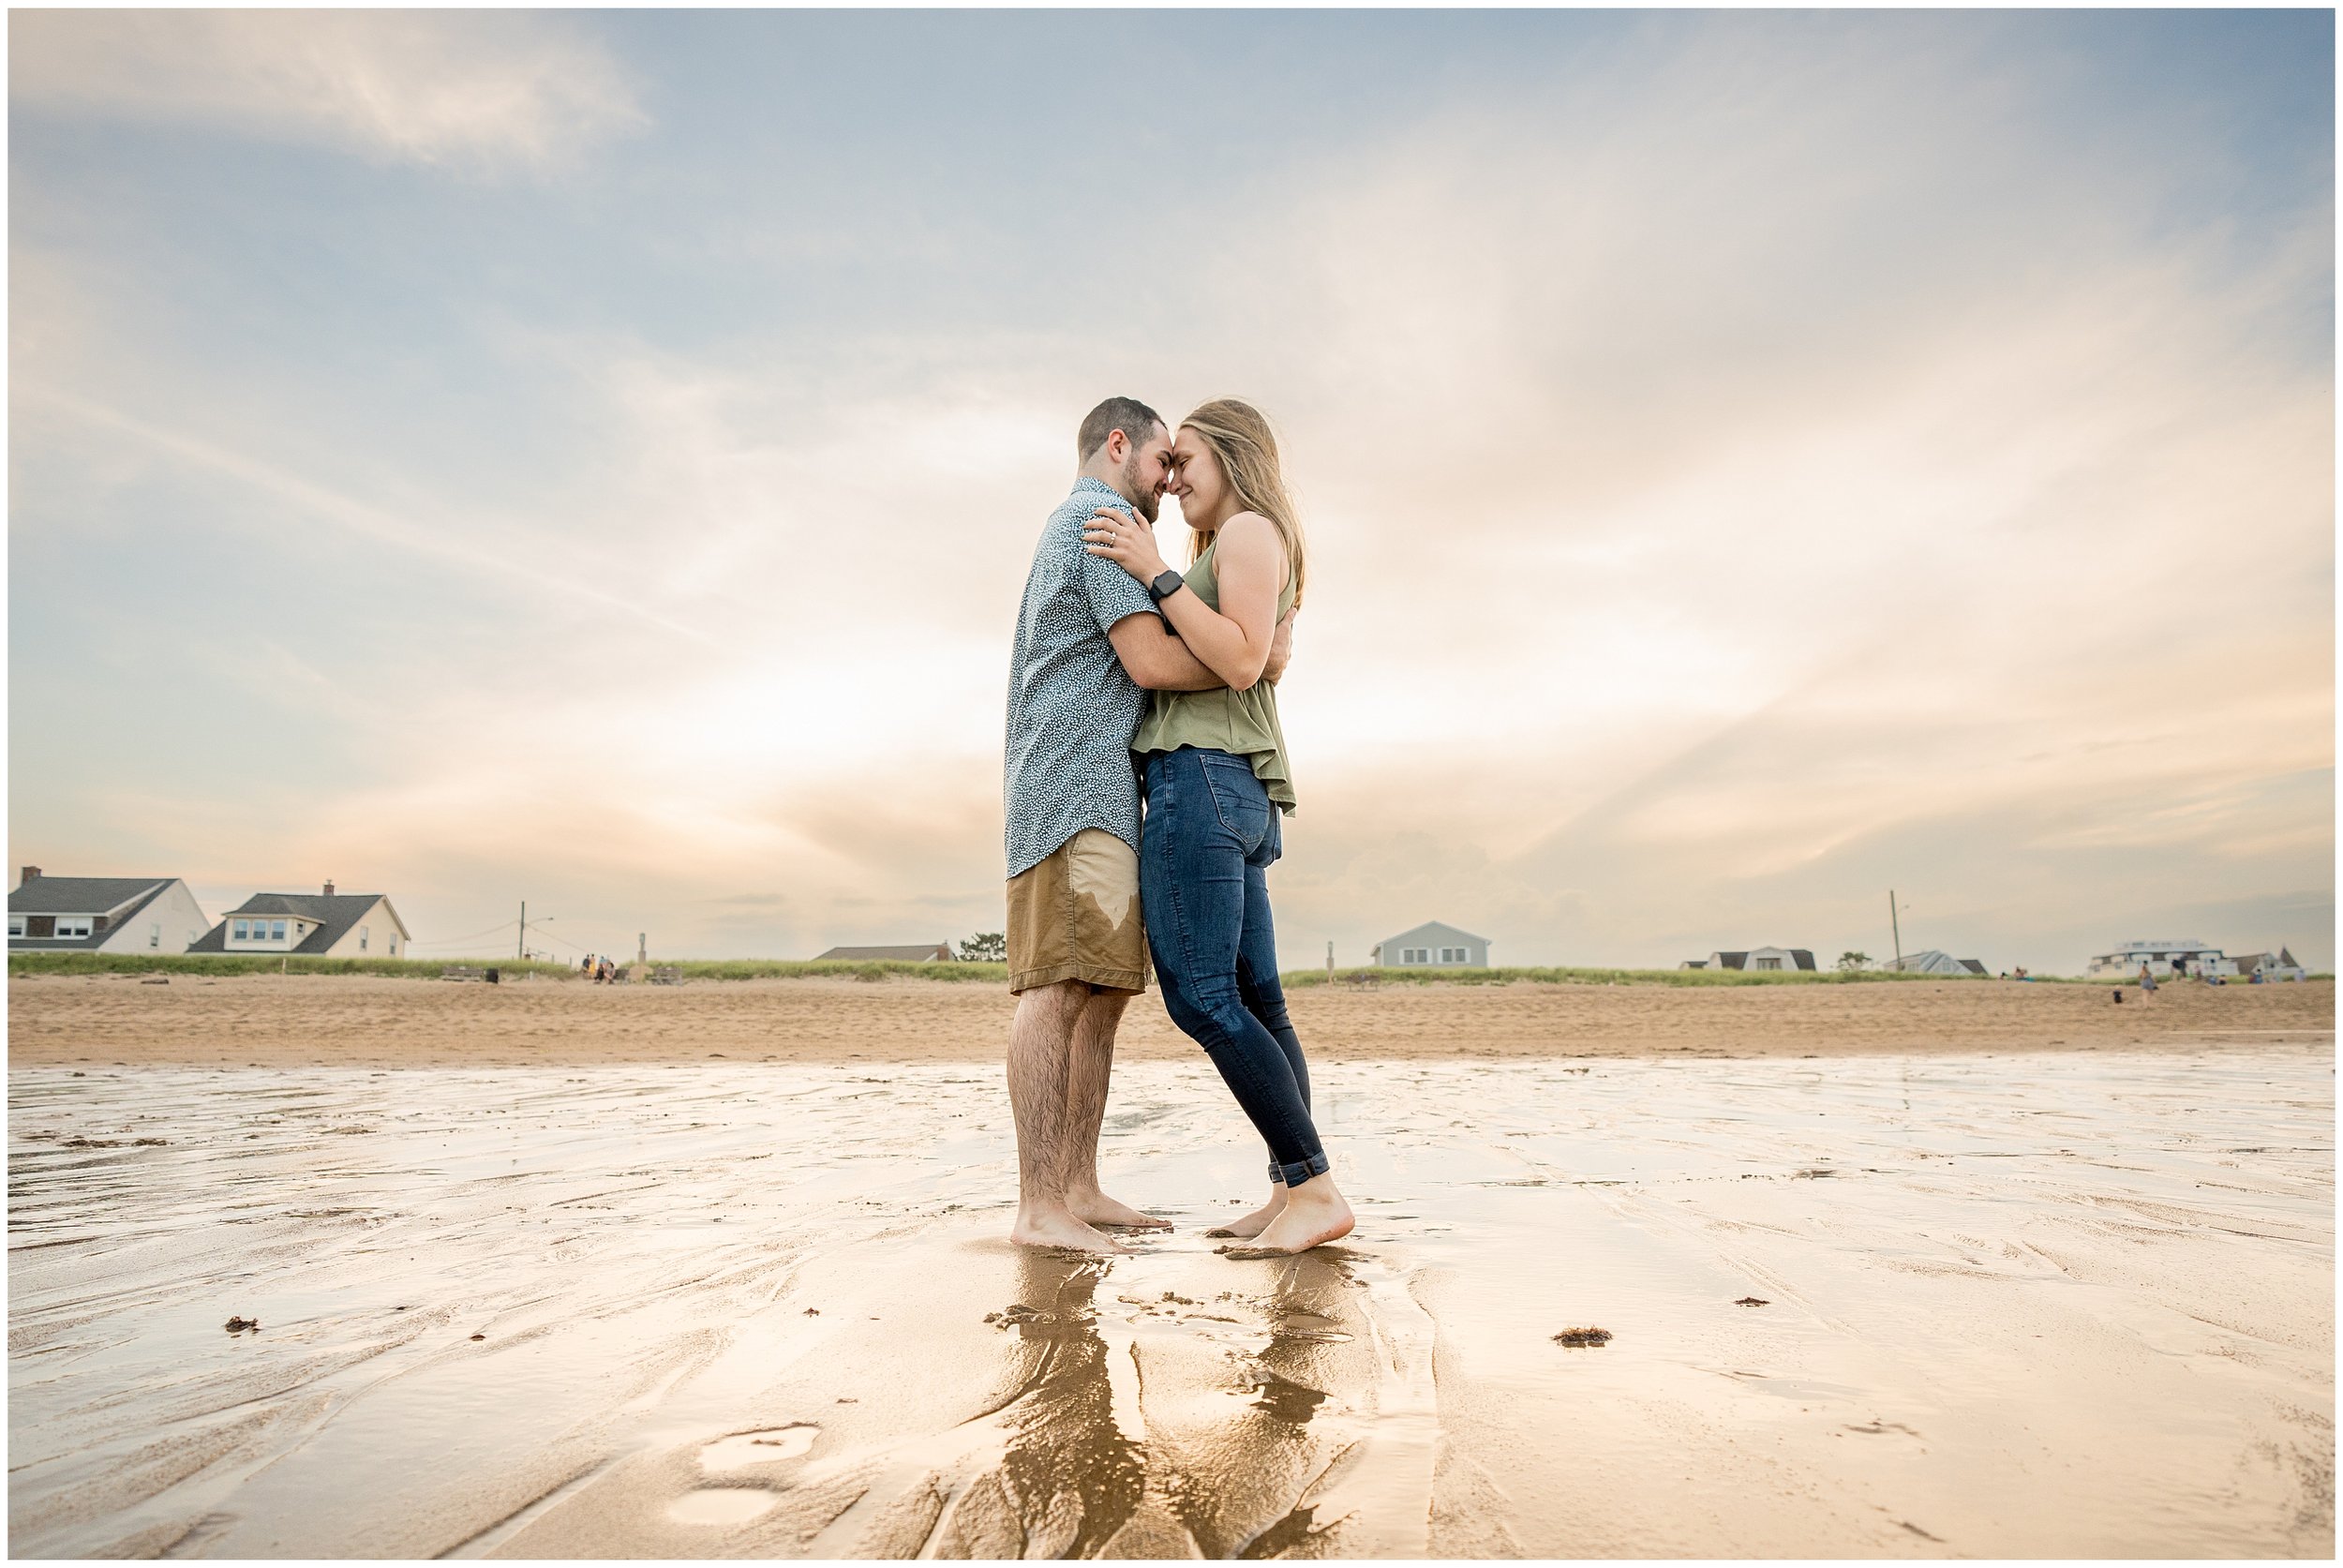 Old Orchard Beach Wedding Photographers, Surprise Proposal Photographers, Two Adventurous Souls- 070723_0014.jpg